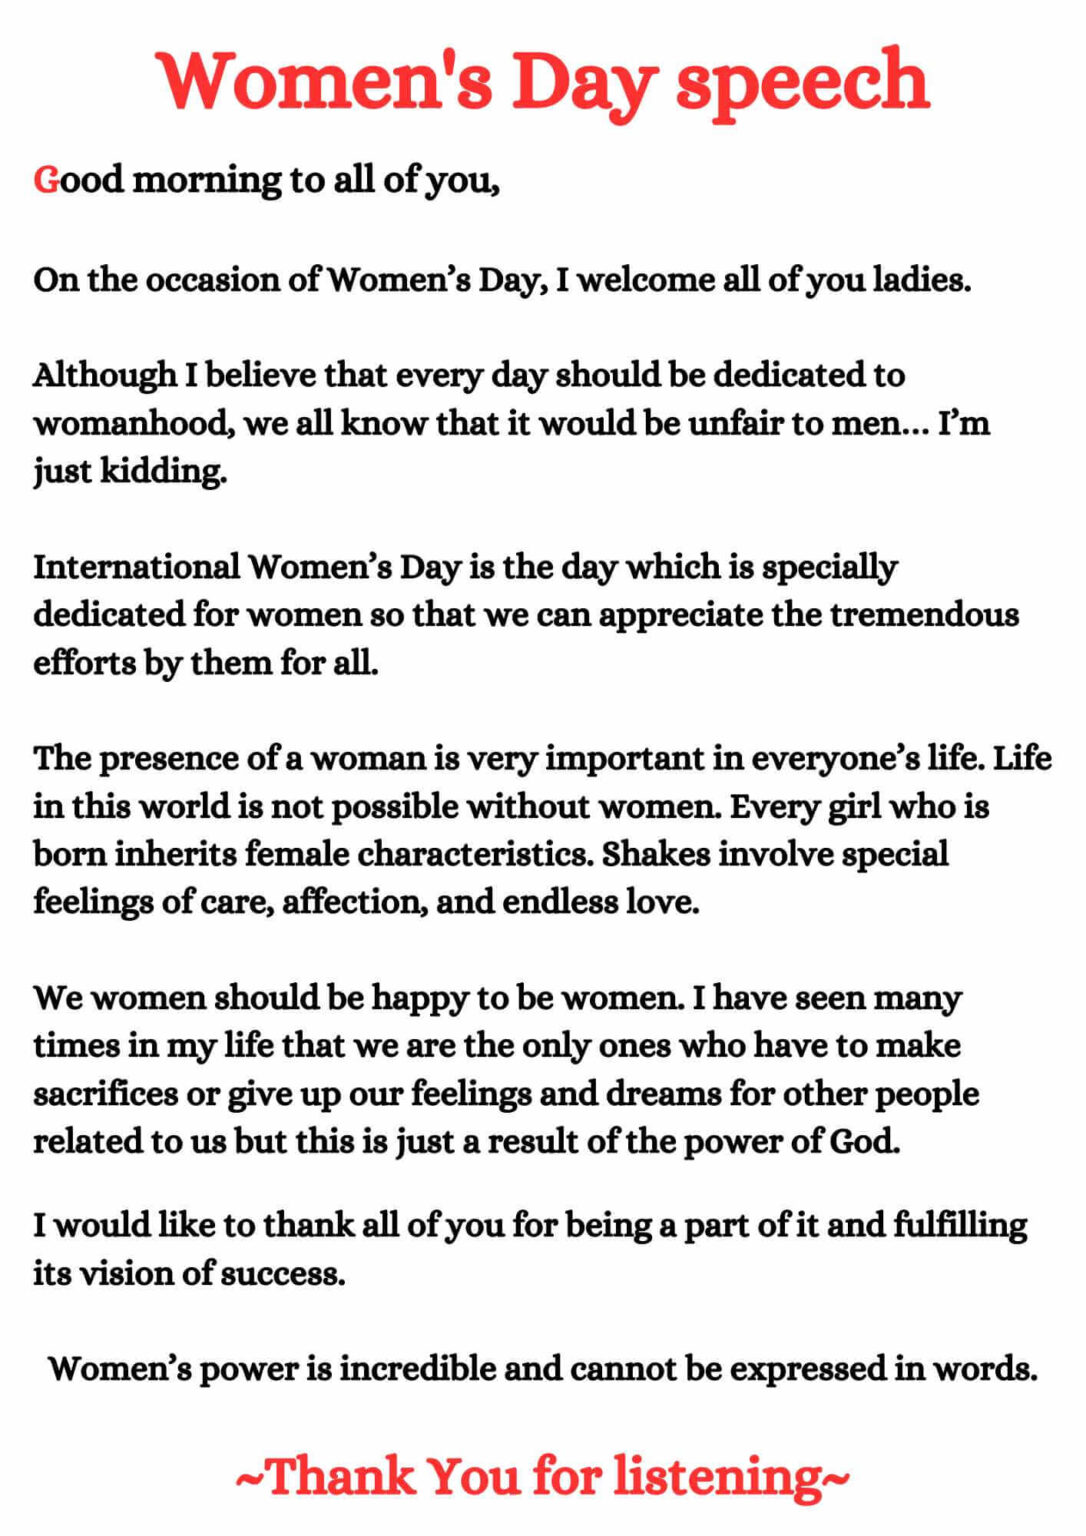 international women's day speech writing in english